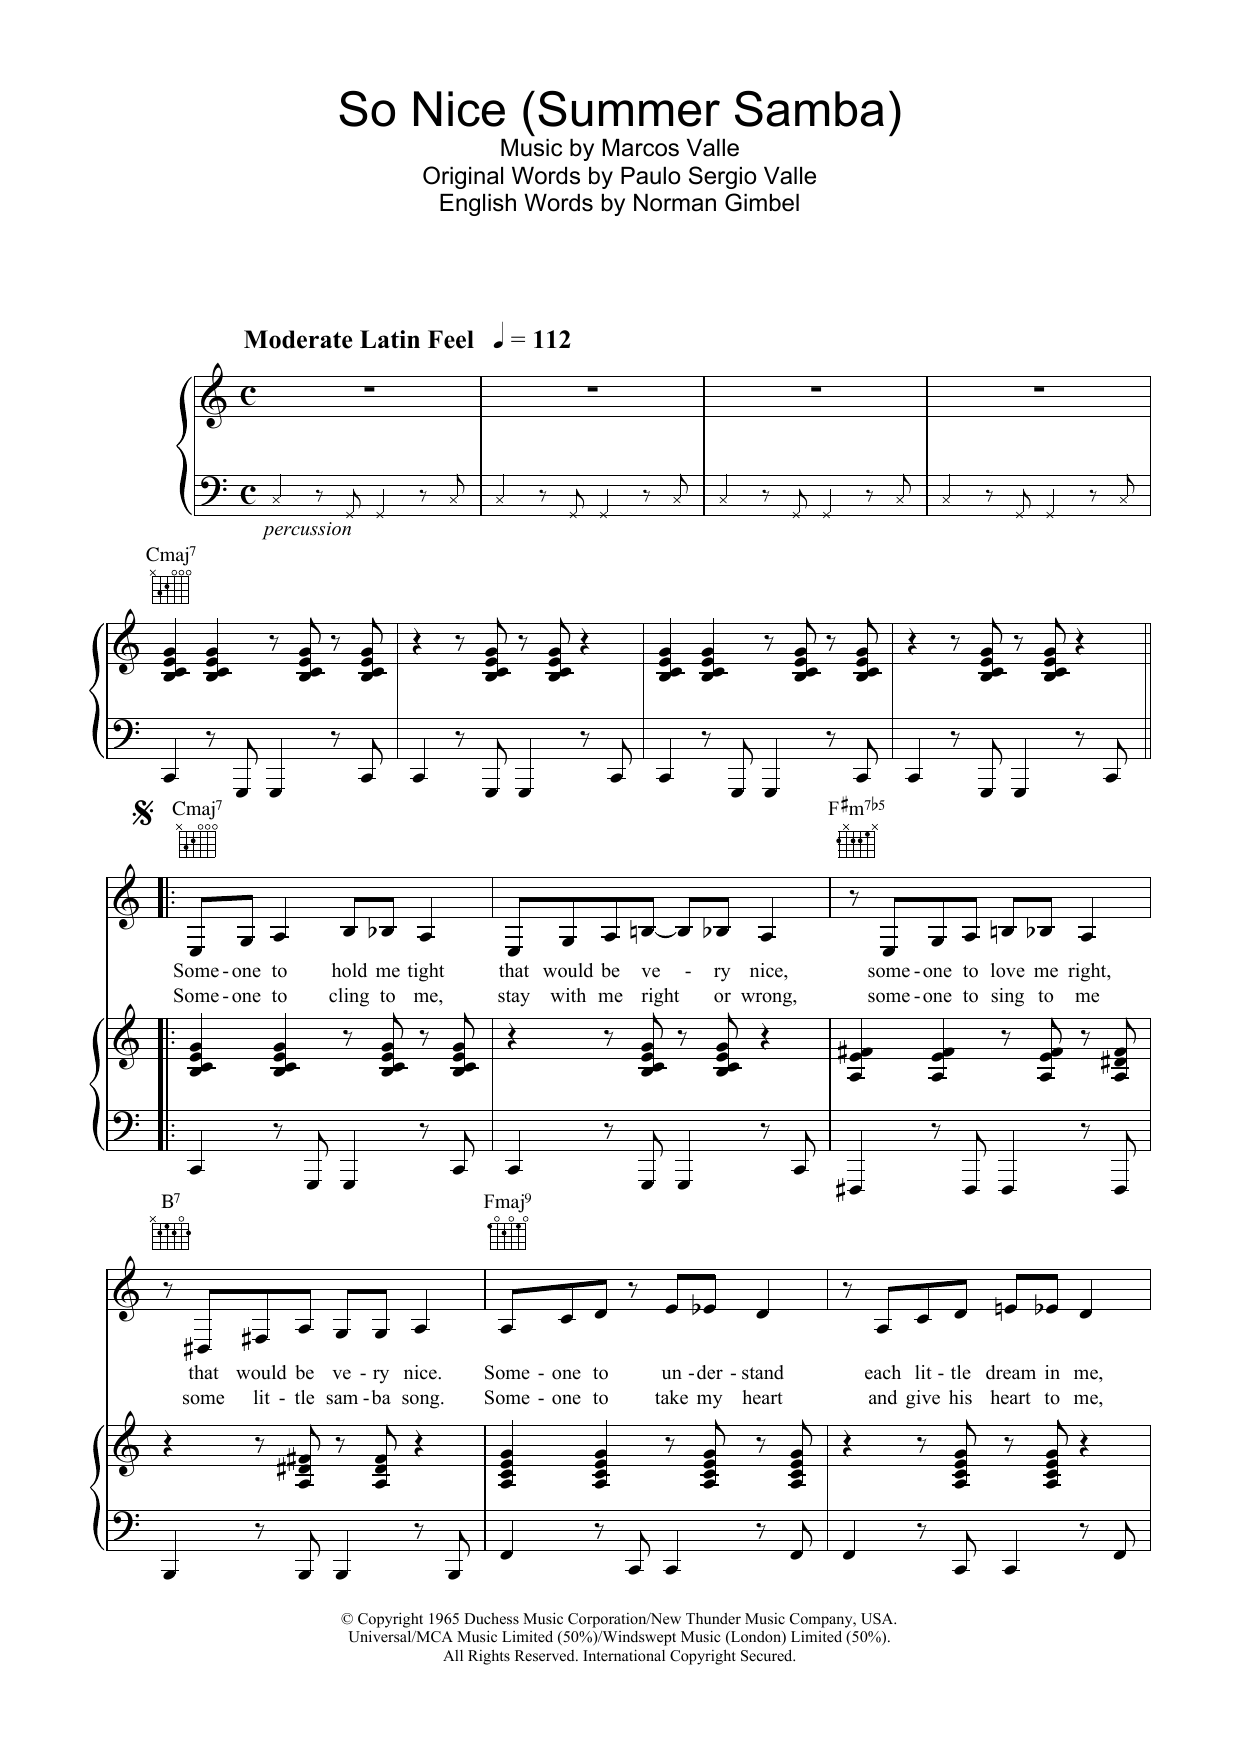 Bebel Gilberto So Nice (Summer Samba) Sheet Music Notes & Chords for Trumpet - Download or Print PDF